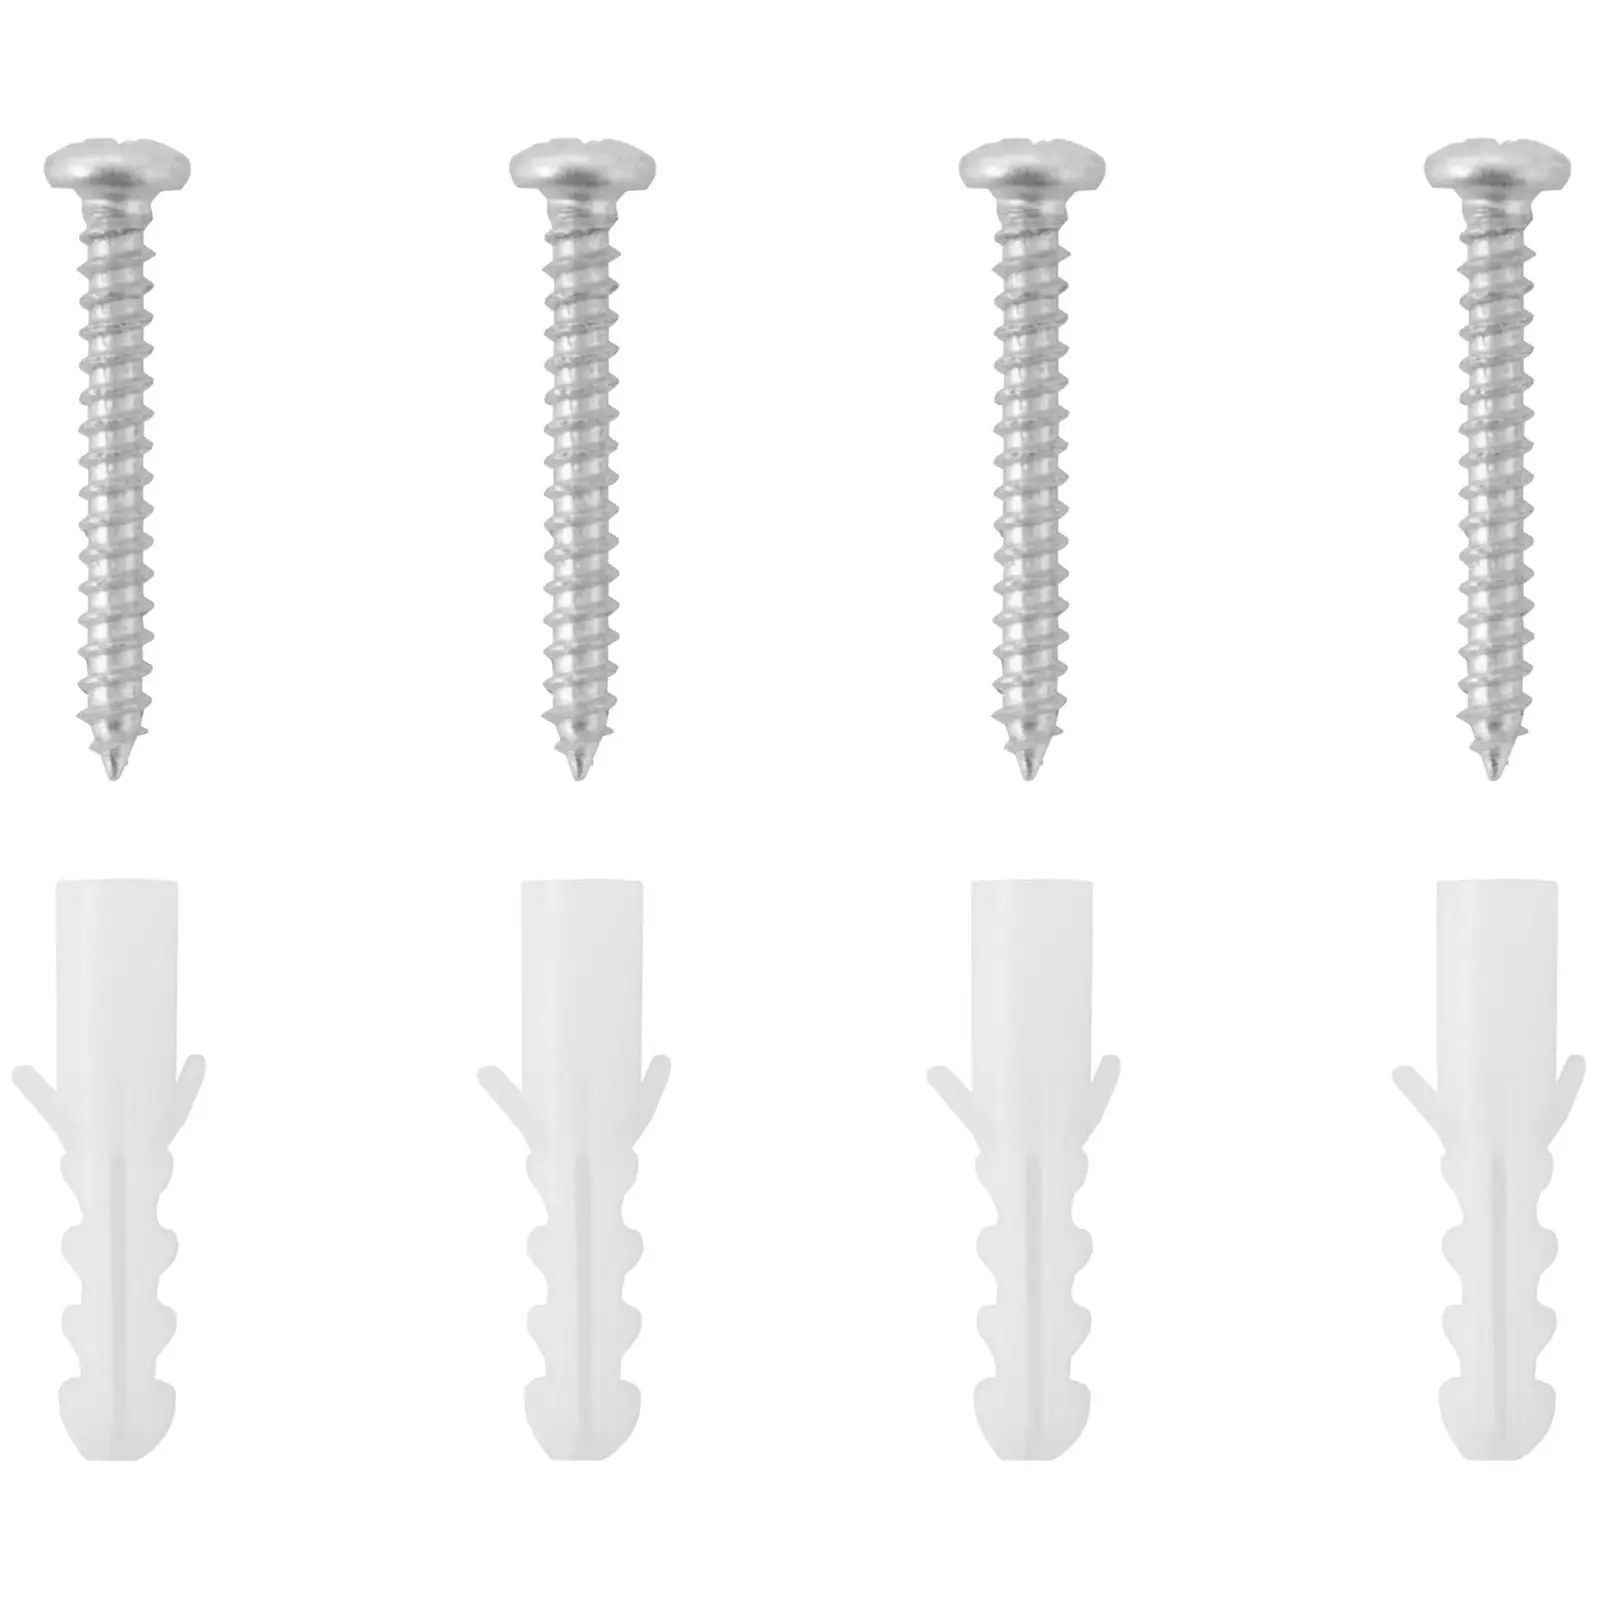 Schlüsselbox - Zahlenschloss - Bügelaufhängung - Abdeckung